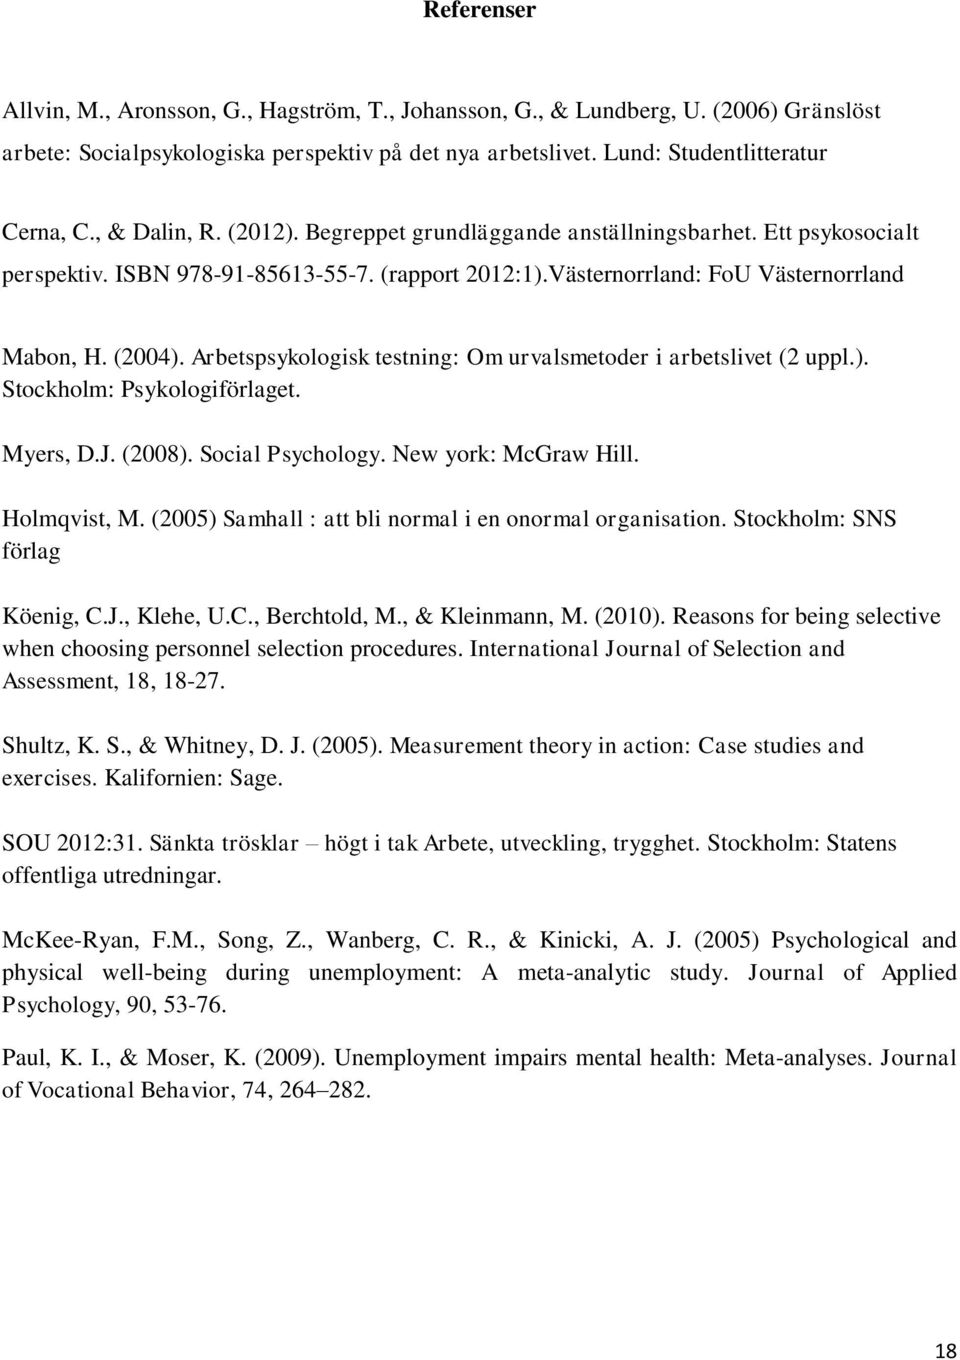 Arbetspsyklgisk testning: Om urvalsmetder i arbetslivet (2 uppl.). Stckhlm: Psyklgiförlaget. Myers, D.J. (2008). Scial Psychlgy. New yrk: McGraw Hill. Hlmqvist, M.